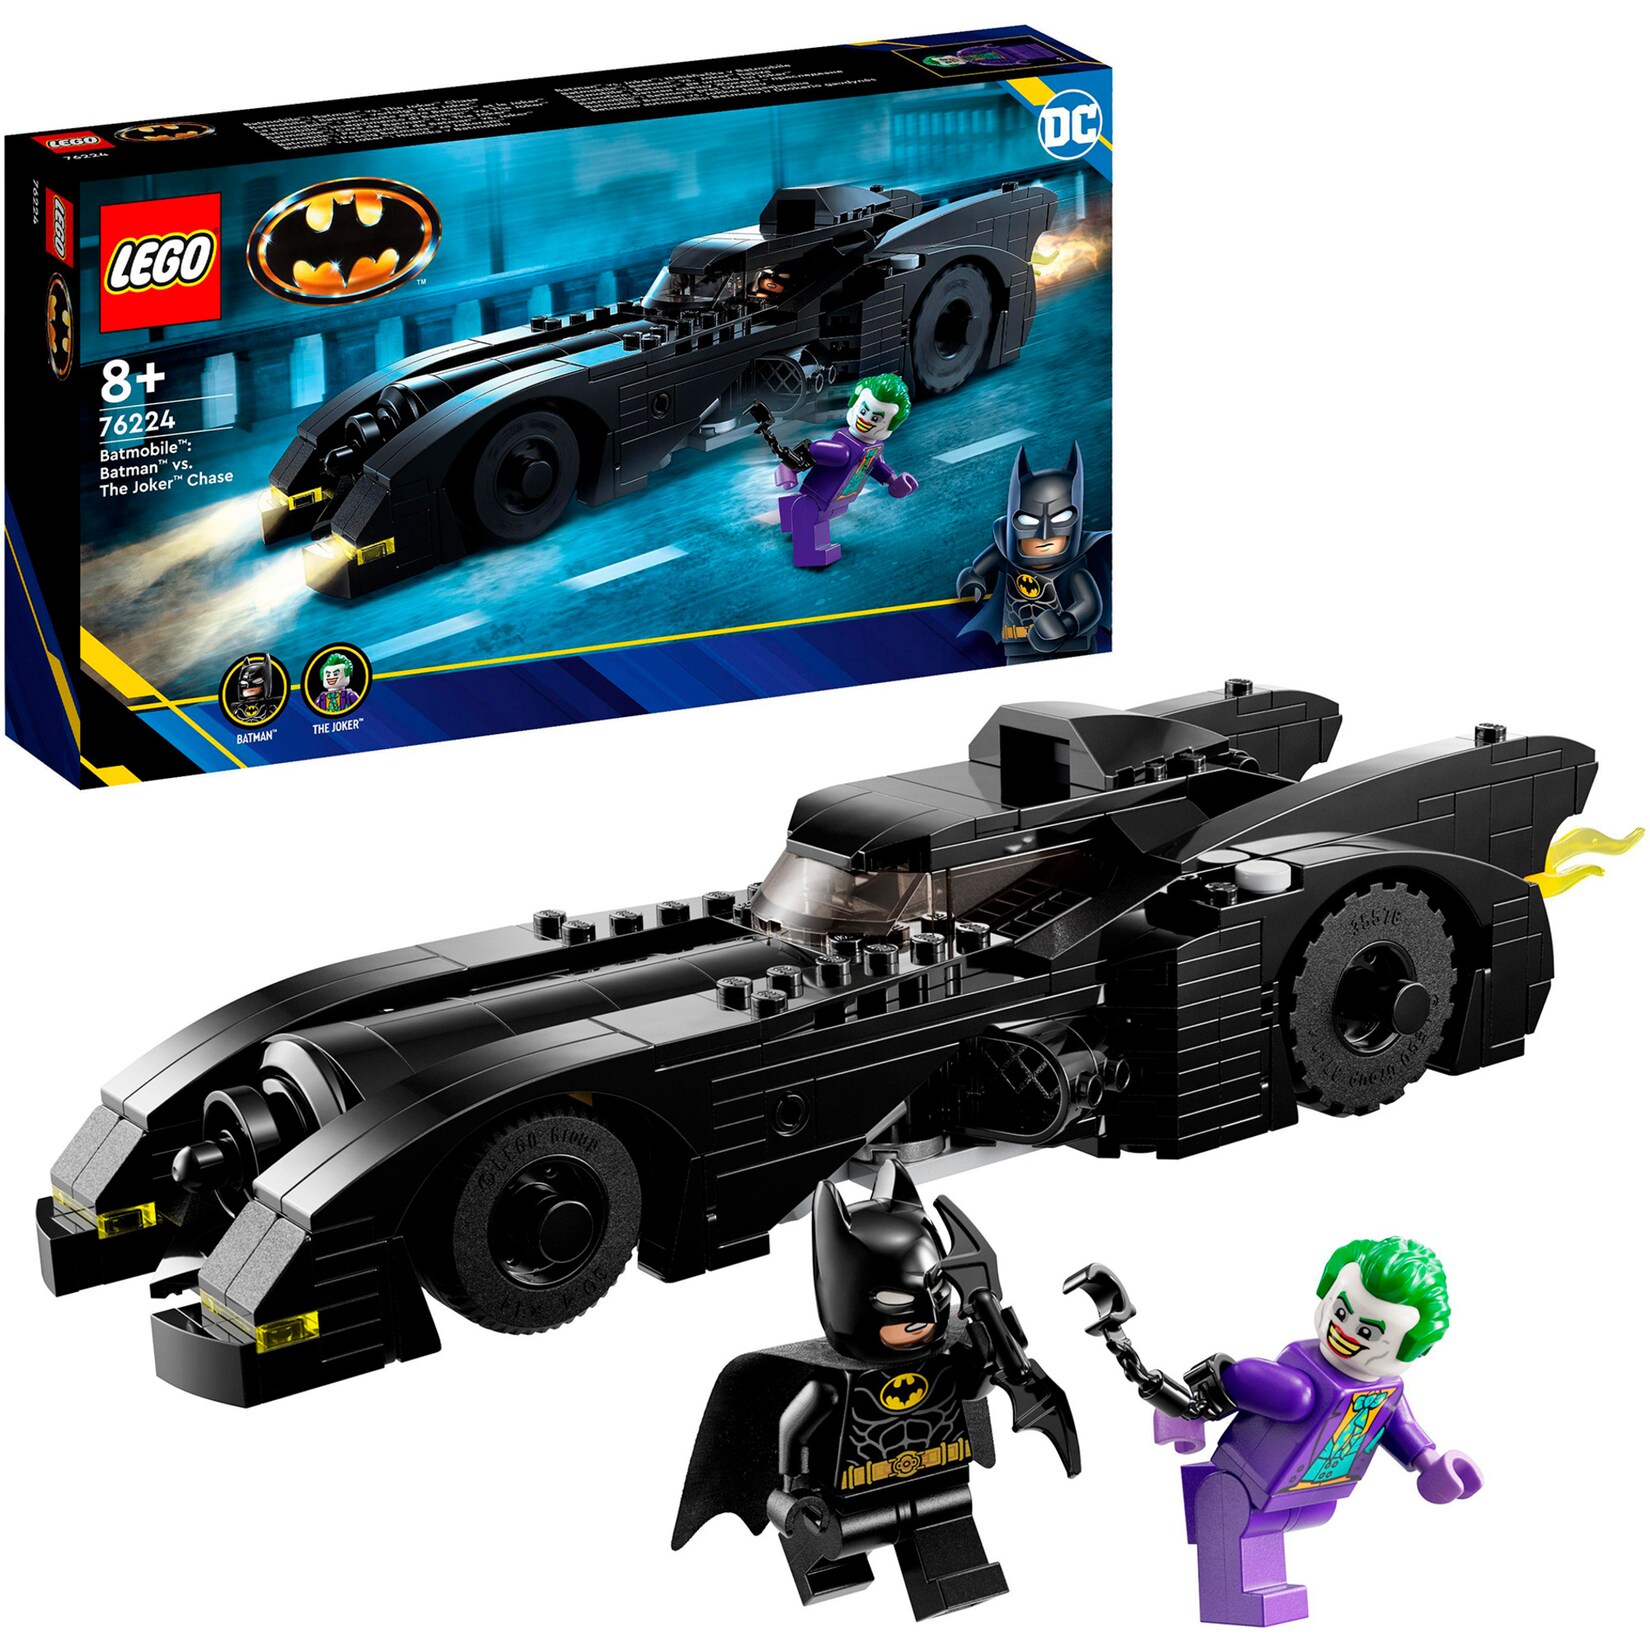 LEGO Konstruktionsspielzeug DC Super Heroes - Batmobile: Batman verfolgt den Joker